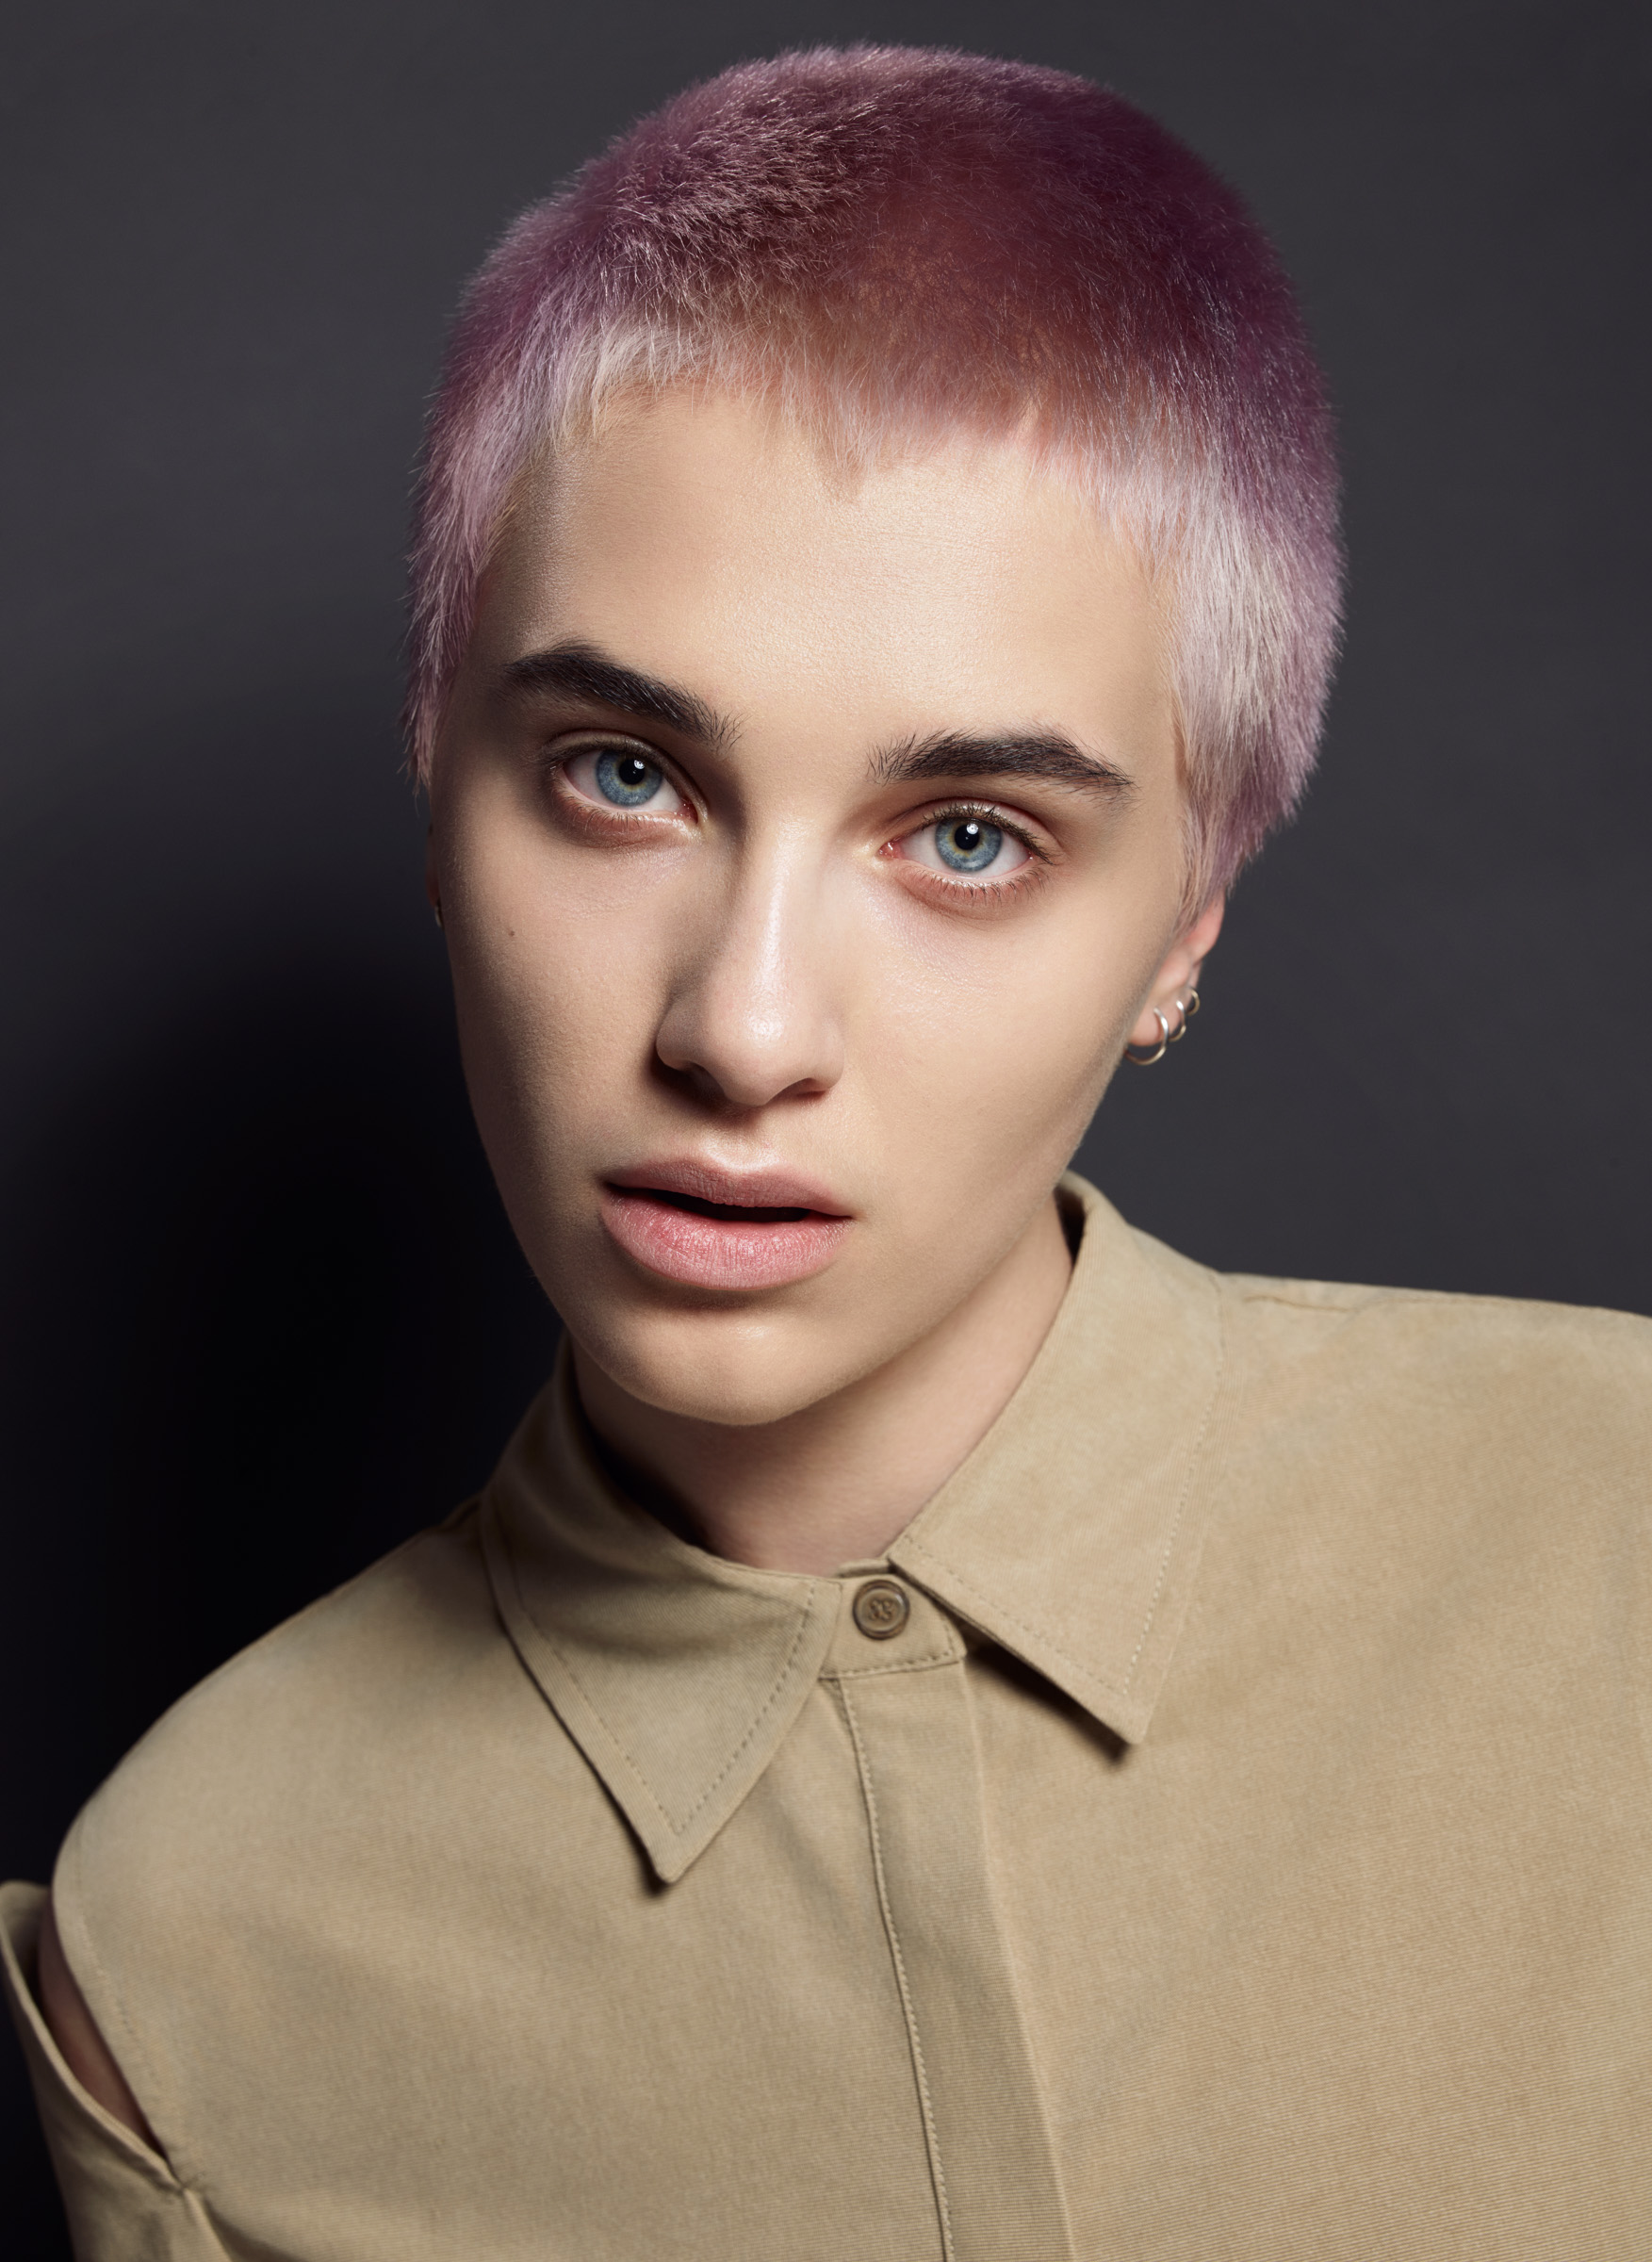 Colour Sculpture - Rush Hair and Beauty: Chris | Jack Eames Hair and Beauty  Photographer